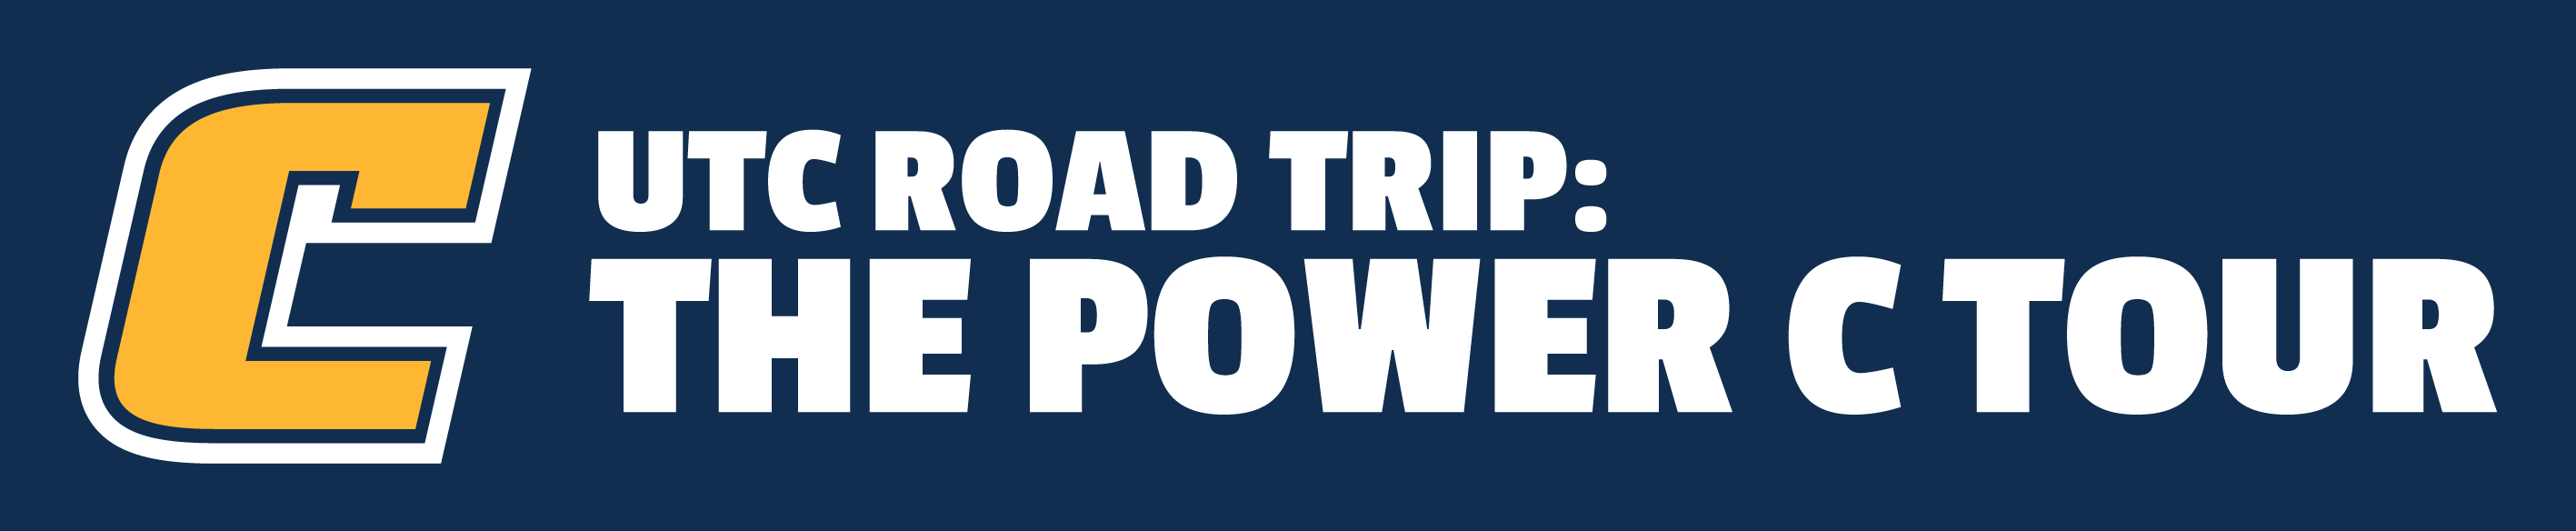 Power C Road Trip